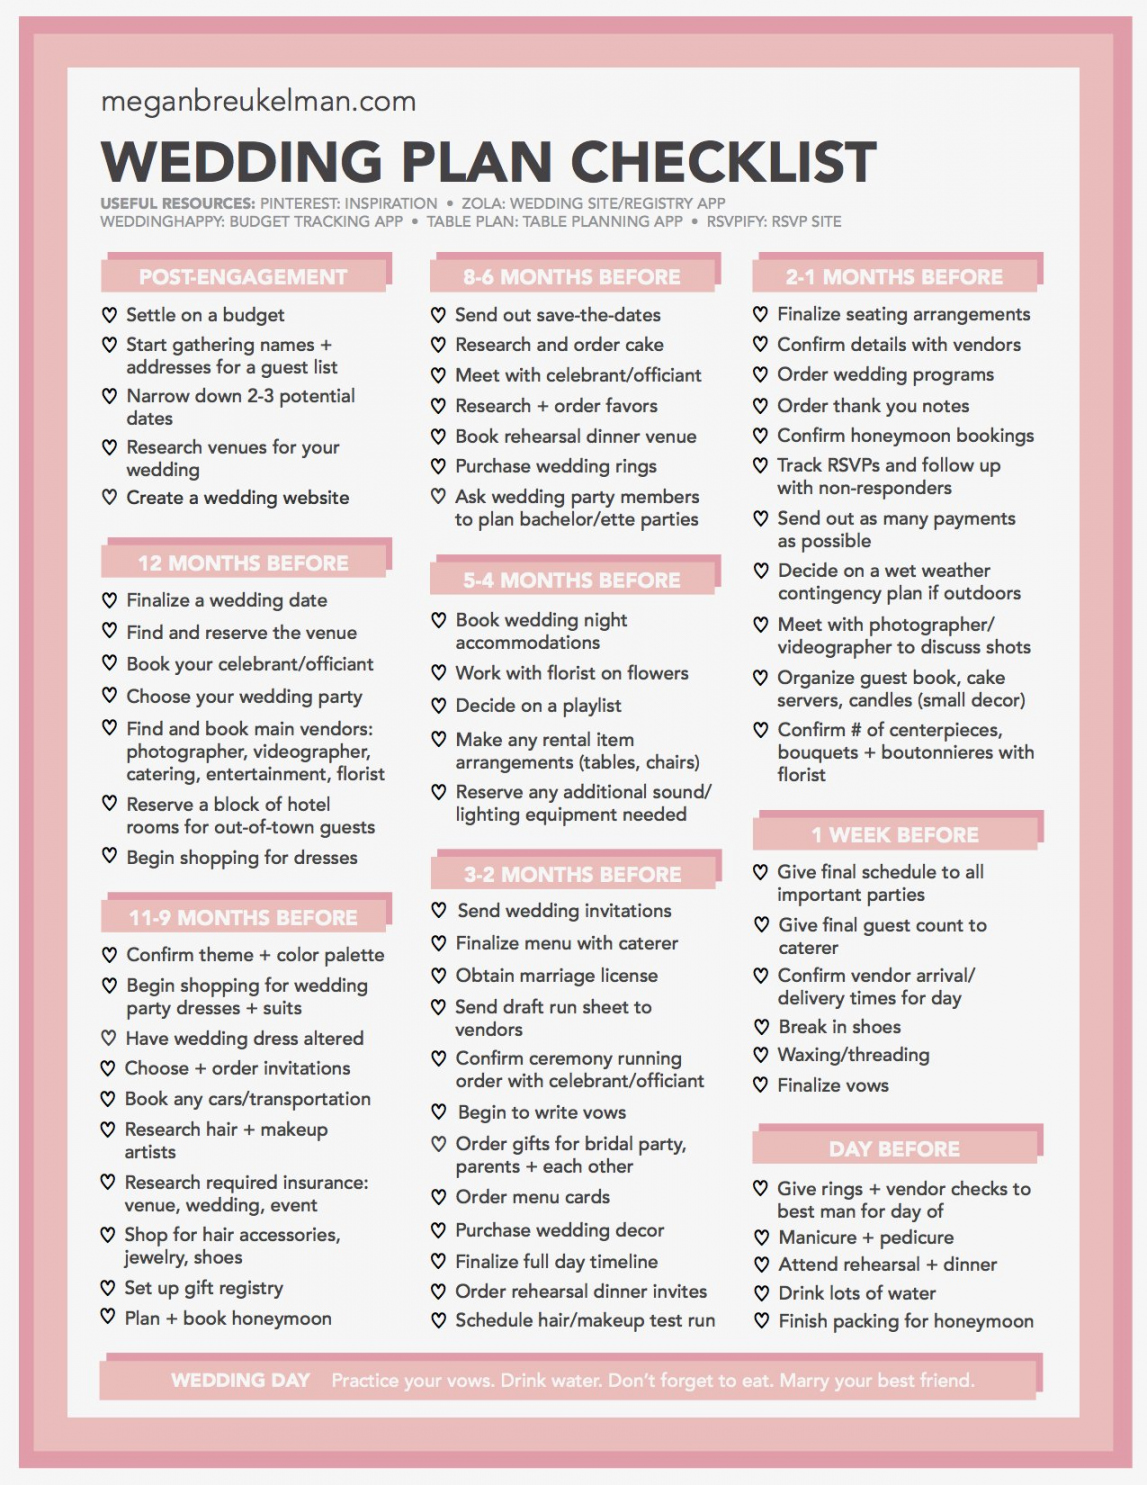 Free Printable Wedding Checklist - Printable - Wedding Countdown Checklist - Free Printable Wedding Checklist PDF